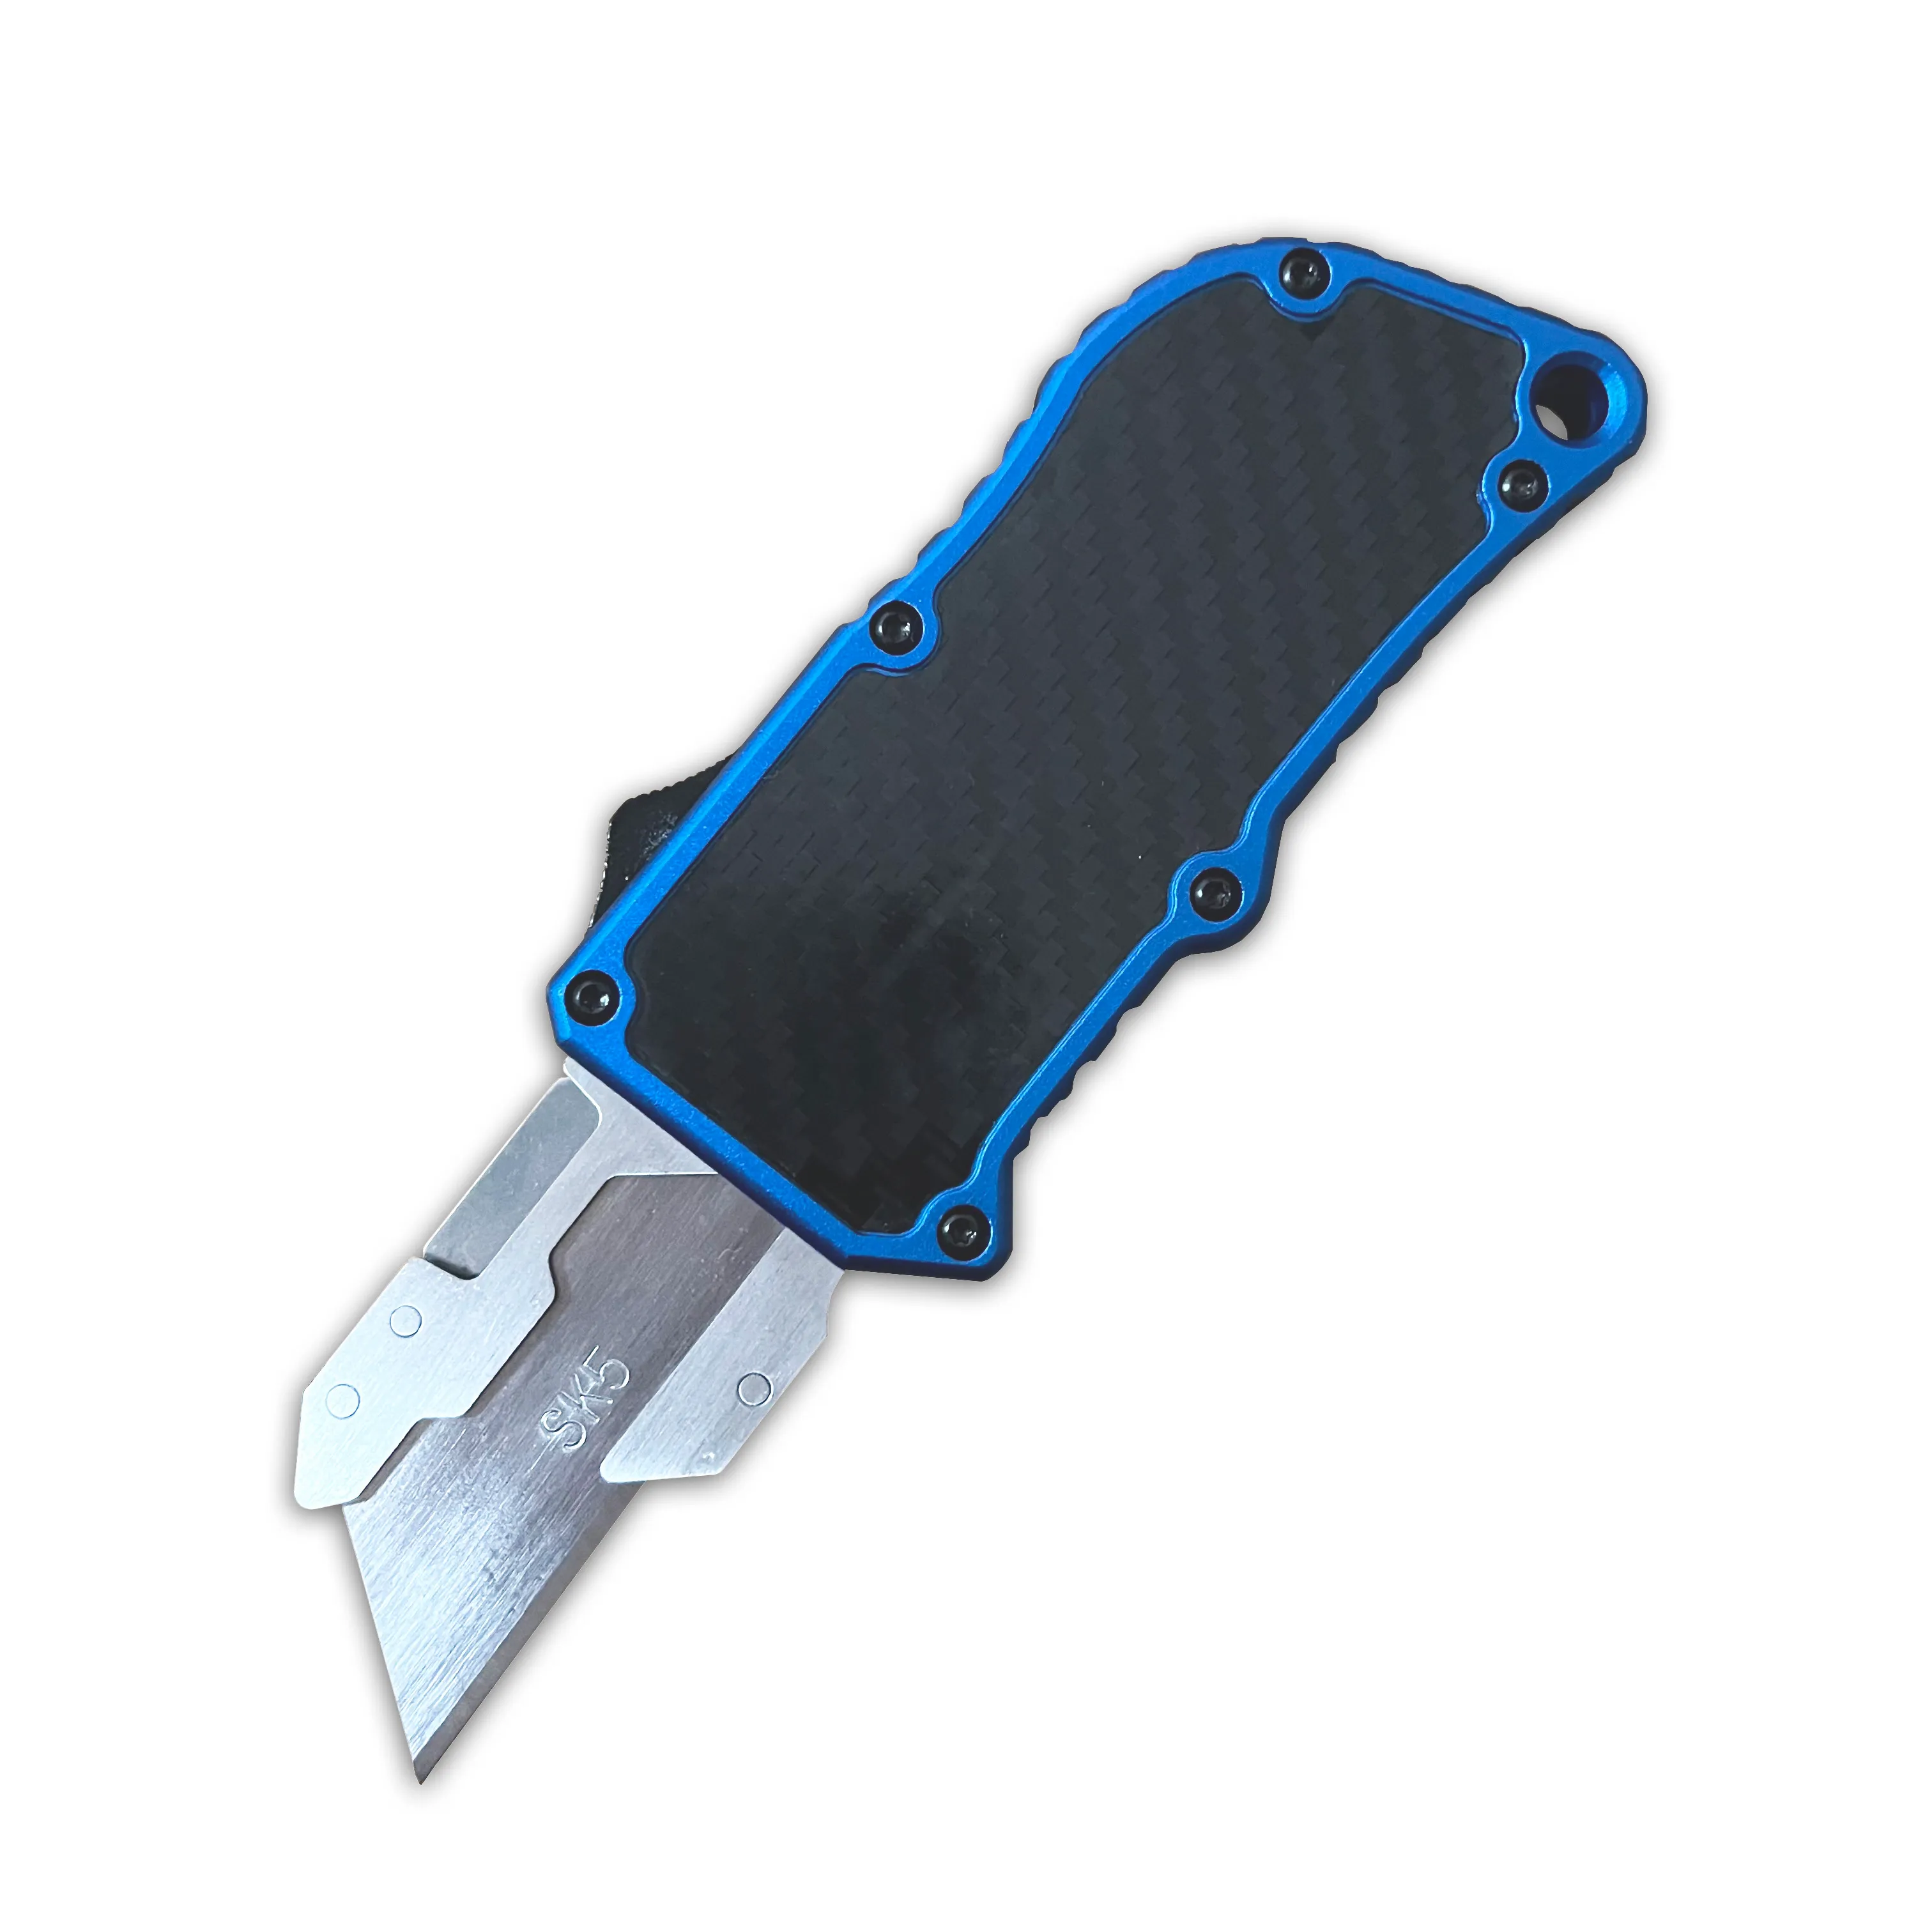 KutzEz Mini 5 Pack Utility Knife